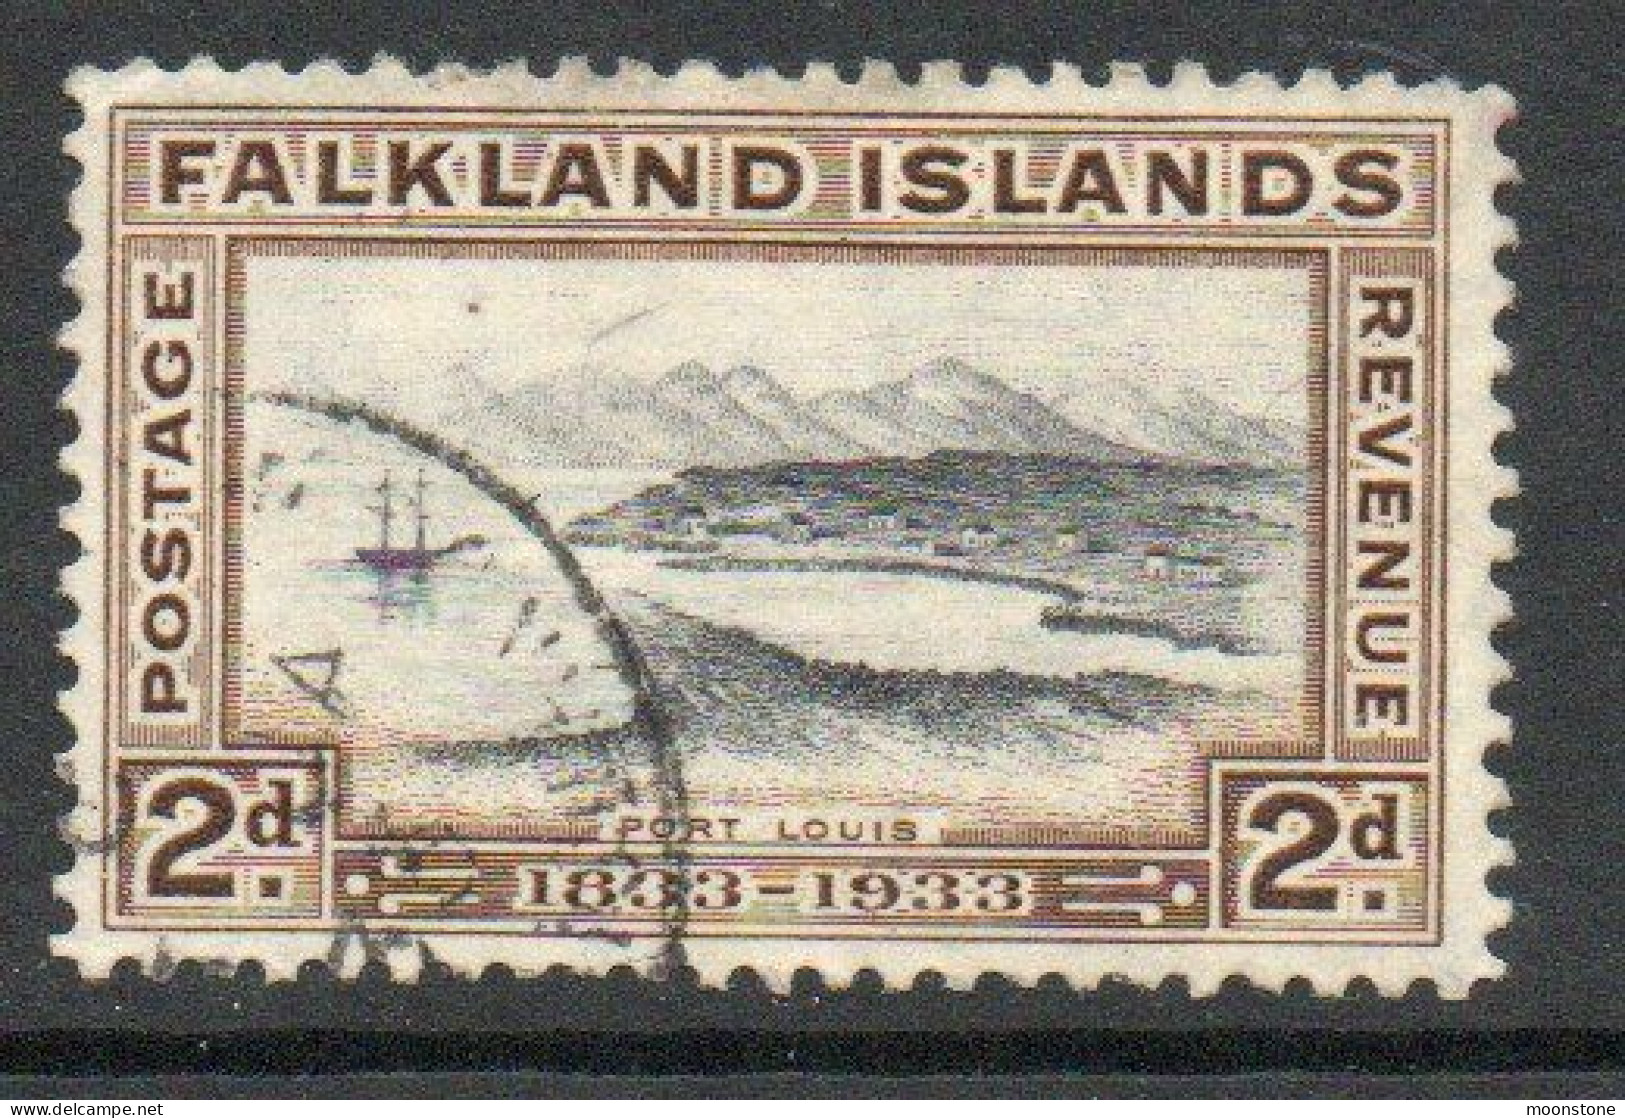 Falkland Islands GV 1933 Centenary 2d Value, Wmk. Multiple Script CA, Used, SG 130 - Falkland Islands